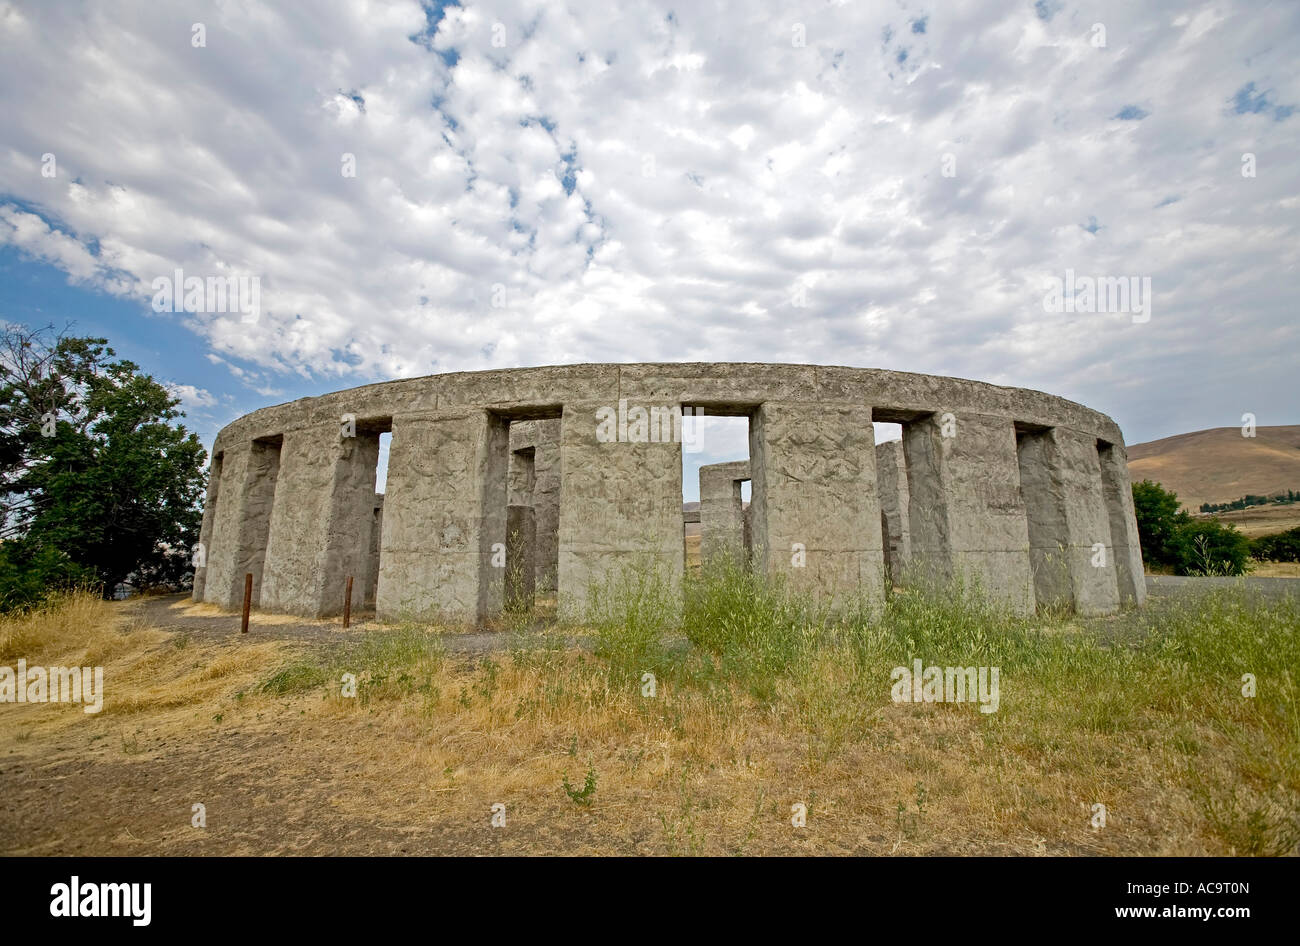 Stonehenge Replica gebaut auf einer Anhöhe oberhalb der Columbia River Gorge nahe Washington Biggs Stockfoto